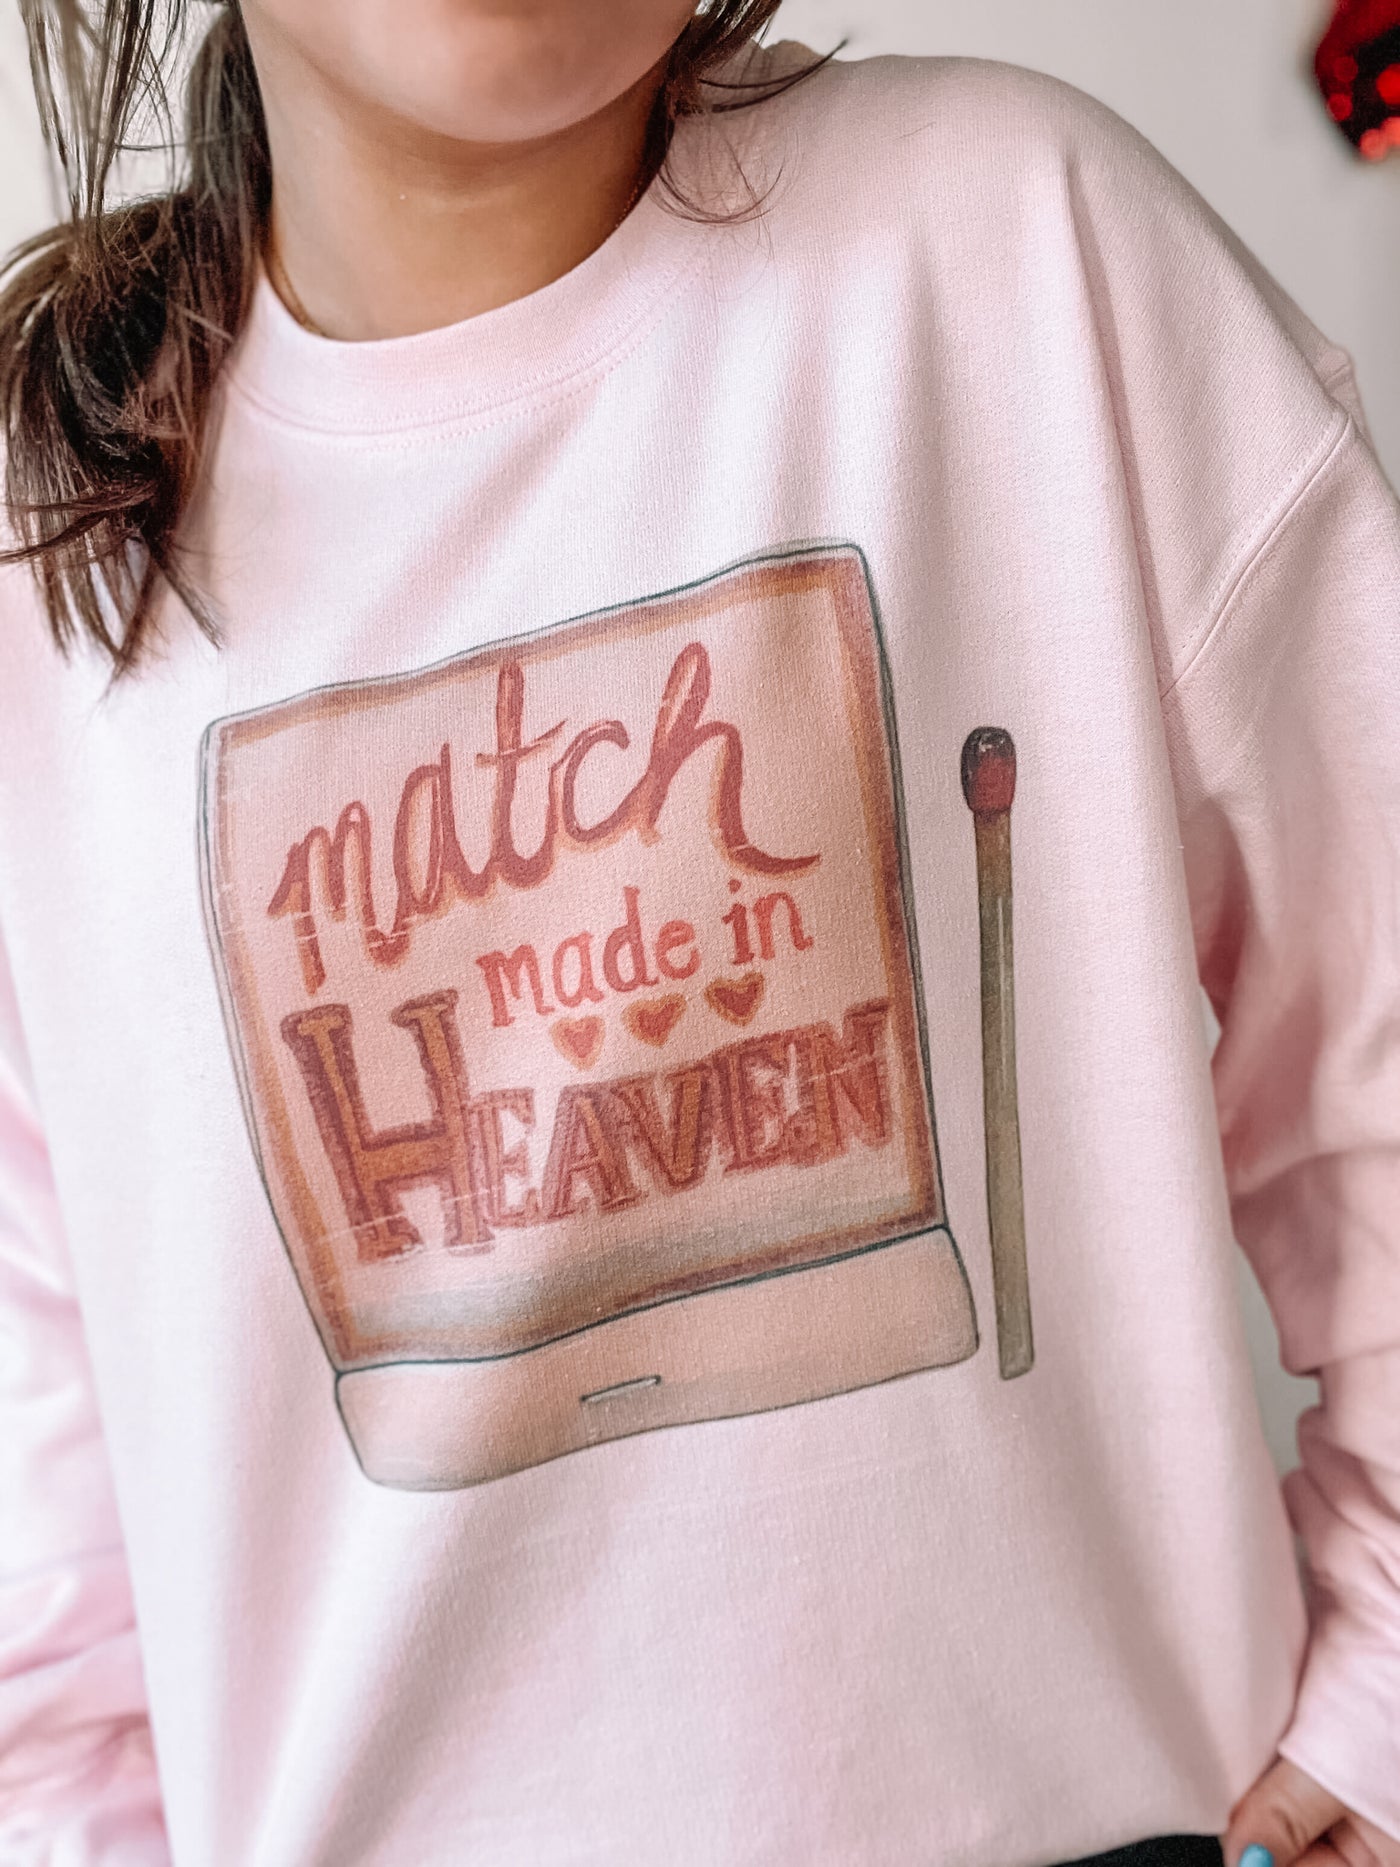 Match Made In Heaven Graphic Sweatshirt-135 - DEMAND GRAPHIC-LEATHER & LACE-[option4]-[option5]-[option6]-Leather & Lace Boutique Shop